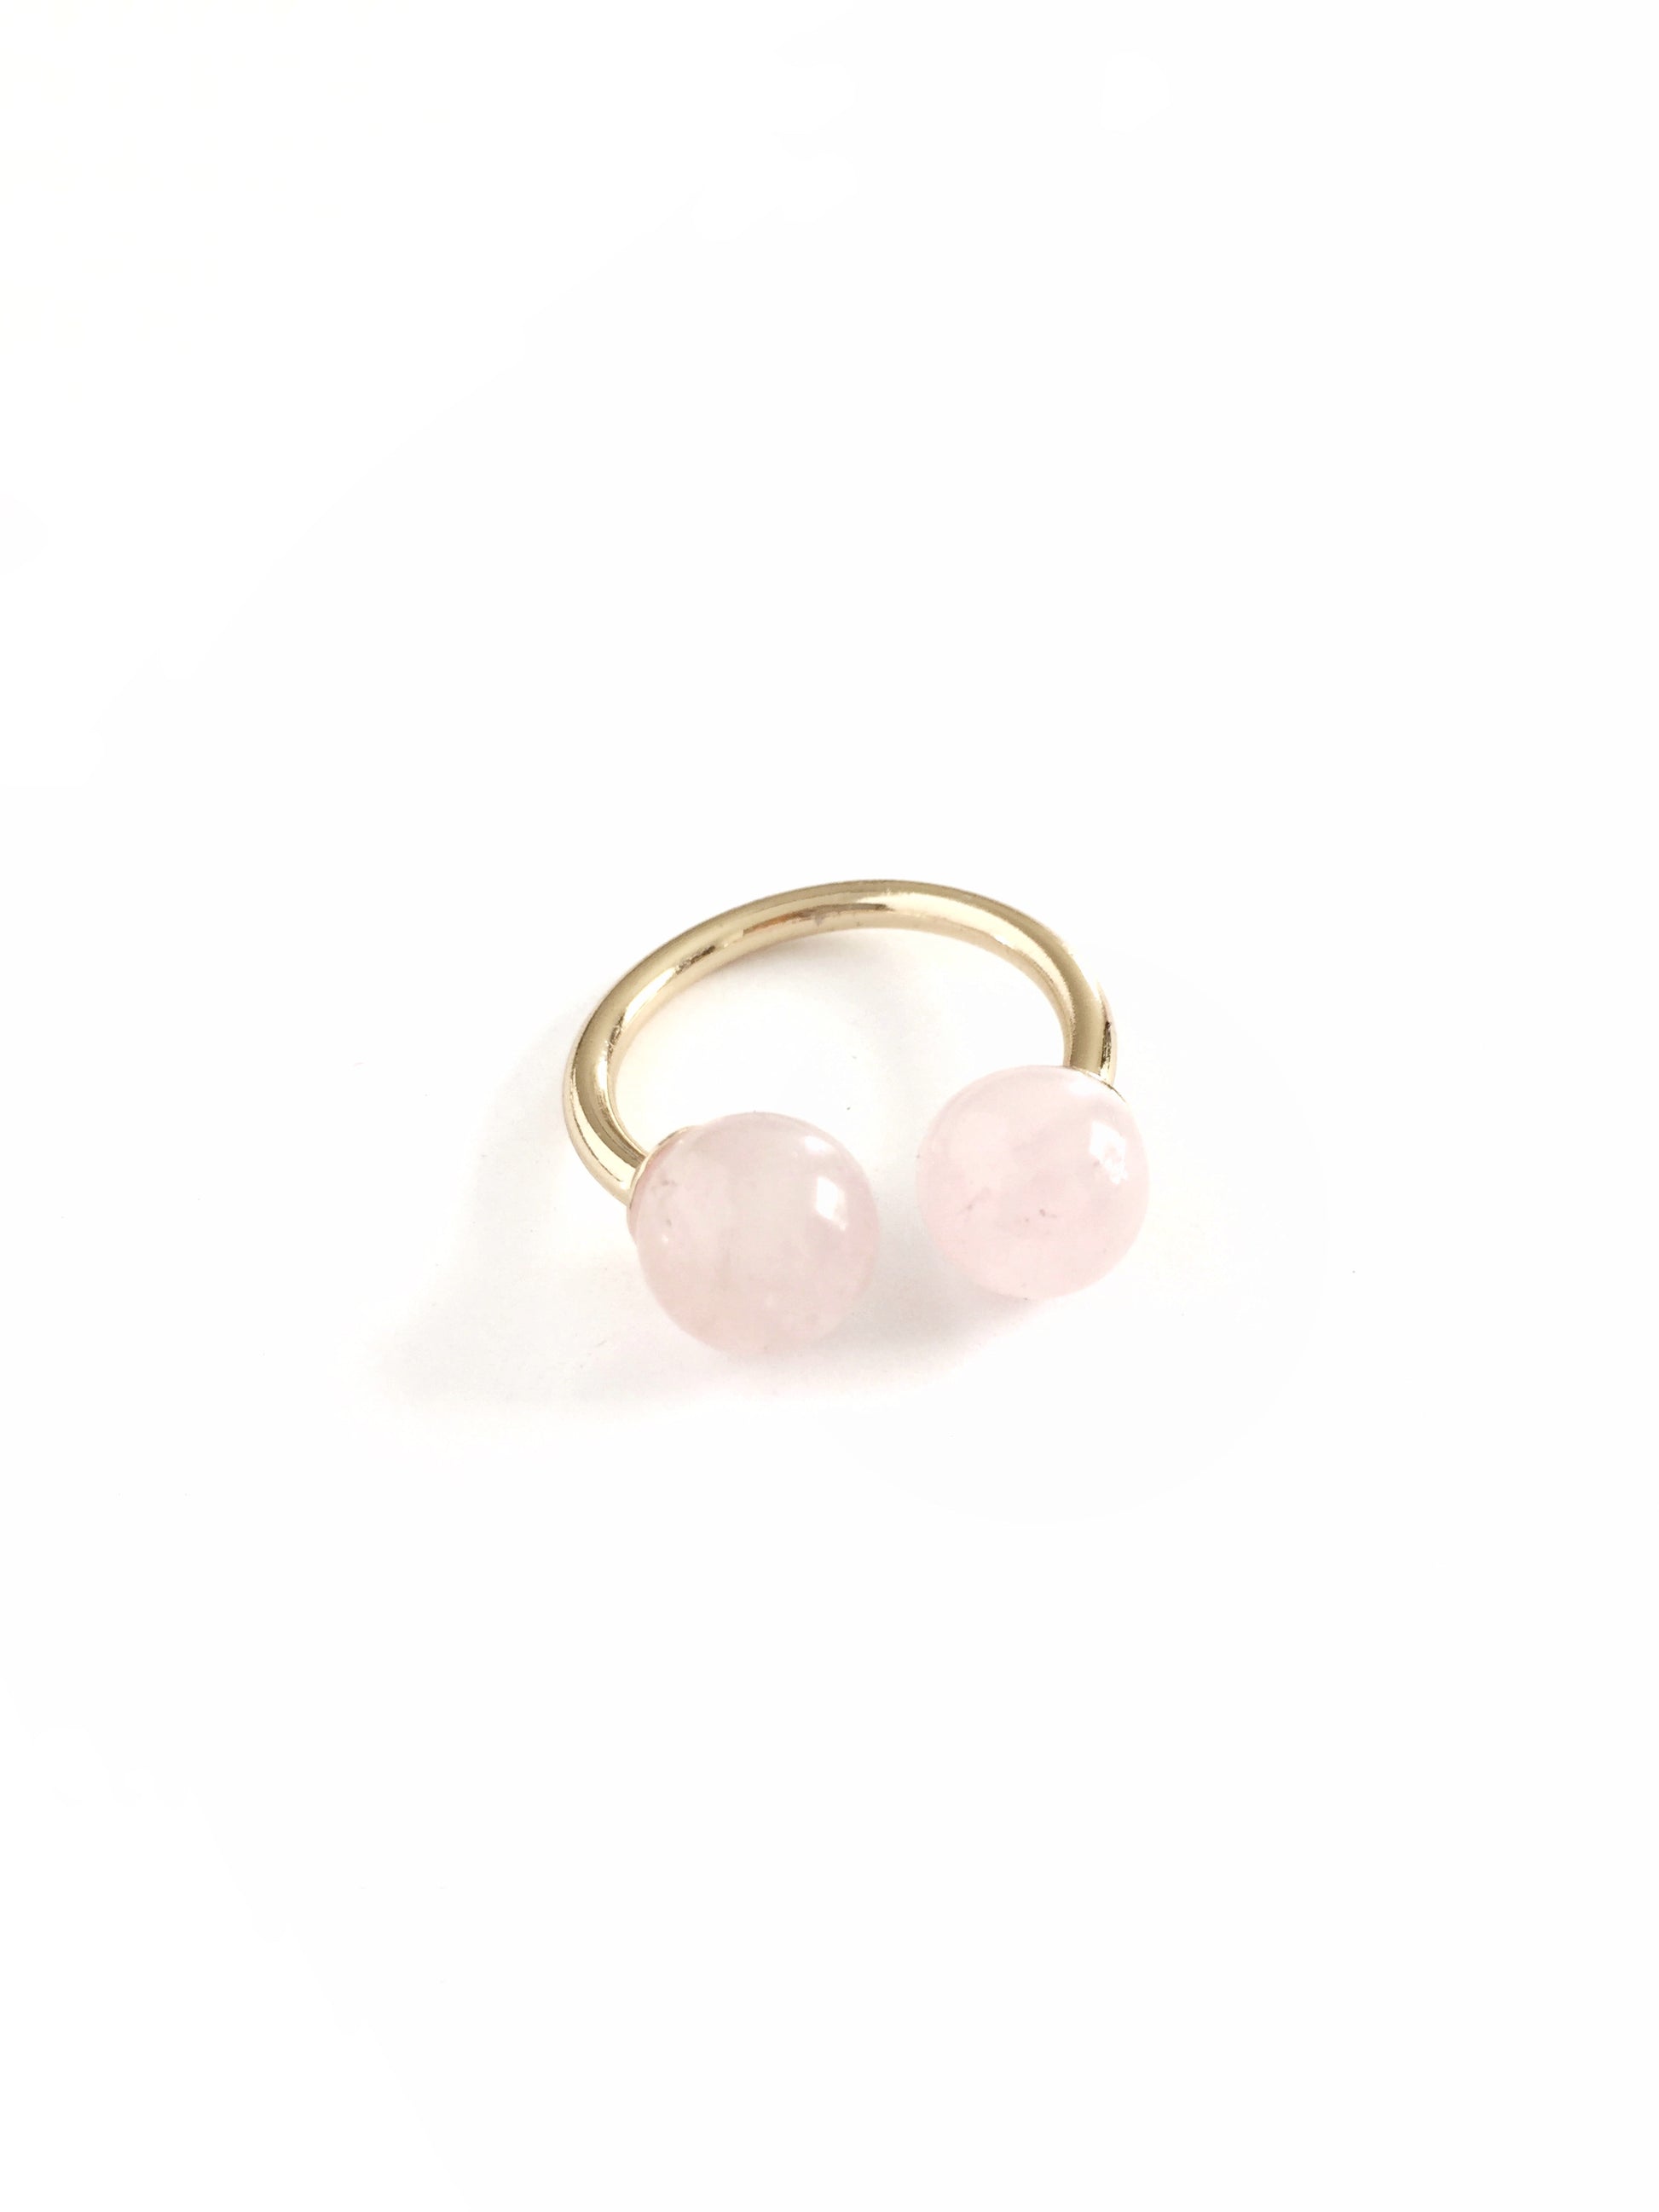 rose quartz thibaut ring by janna conner